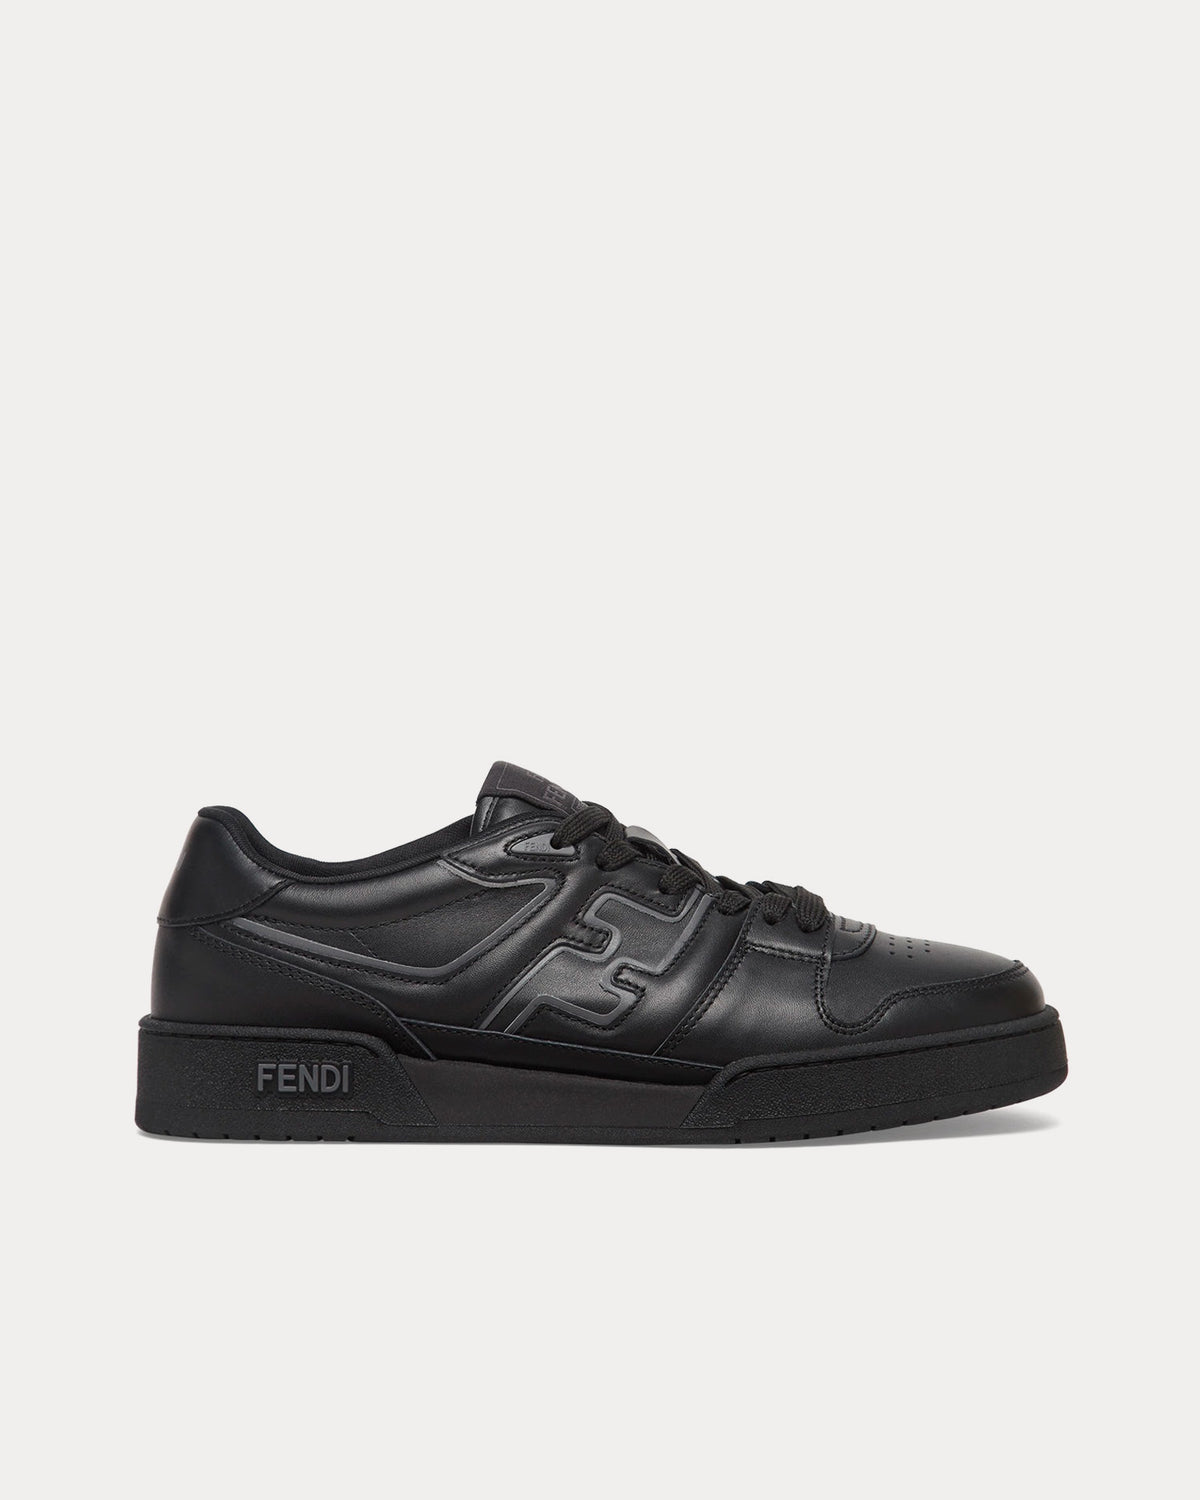 Fendi Match Leather White / Beige High Top Sneakers - Sneak in Peace